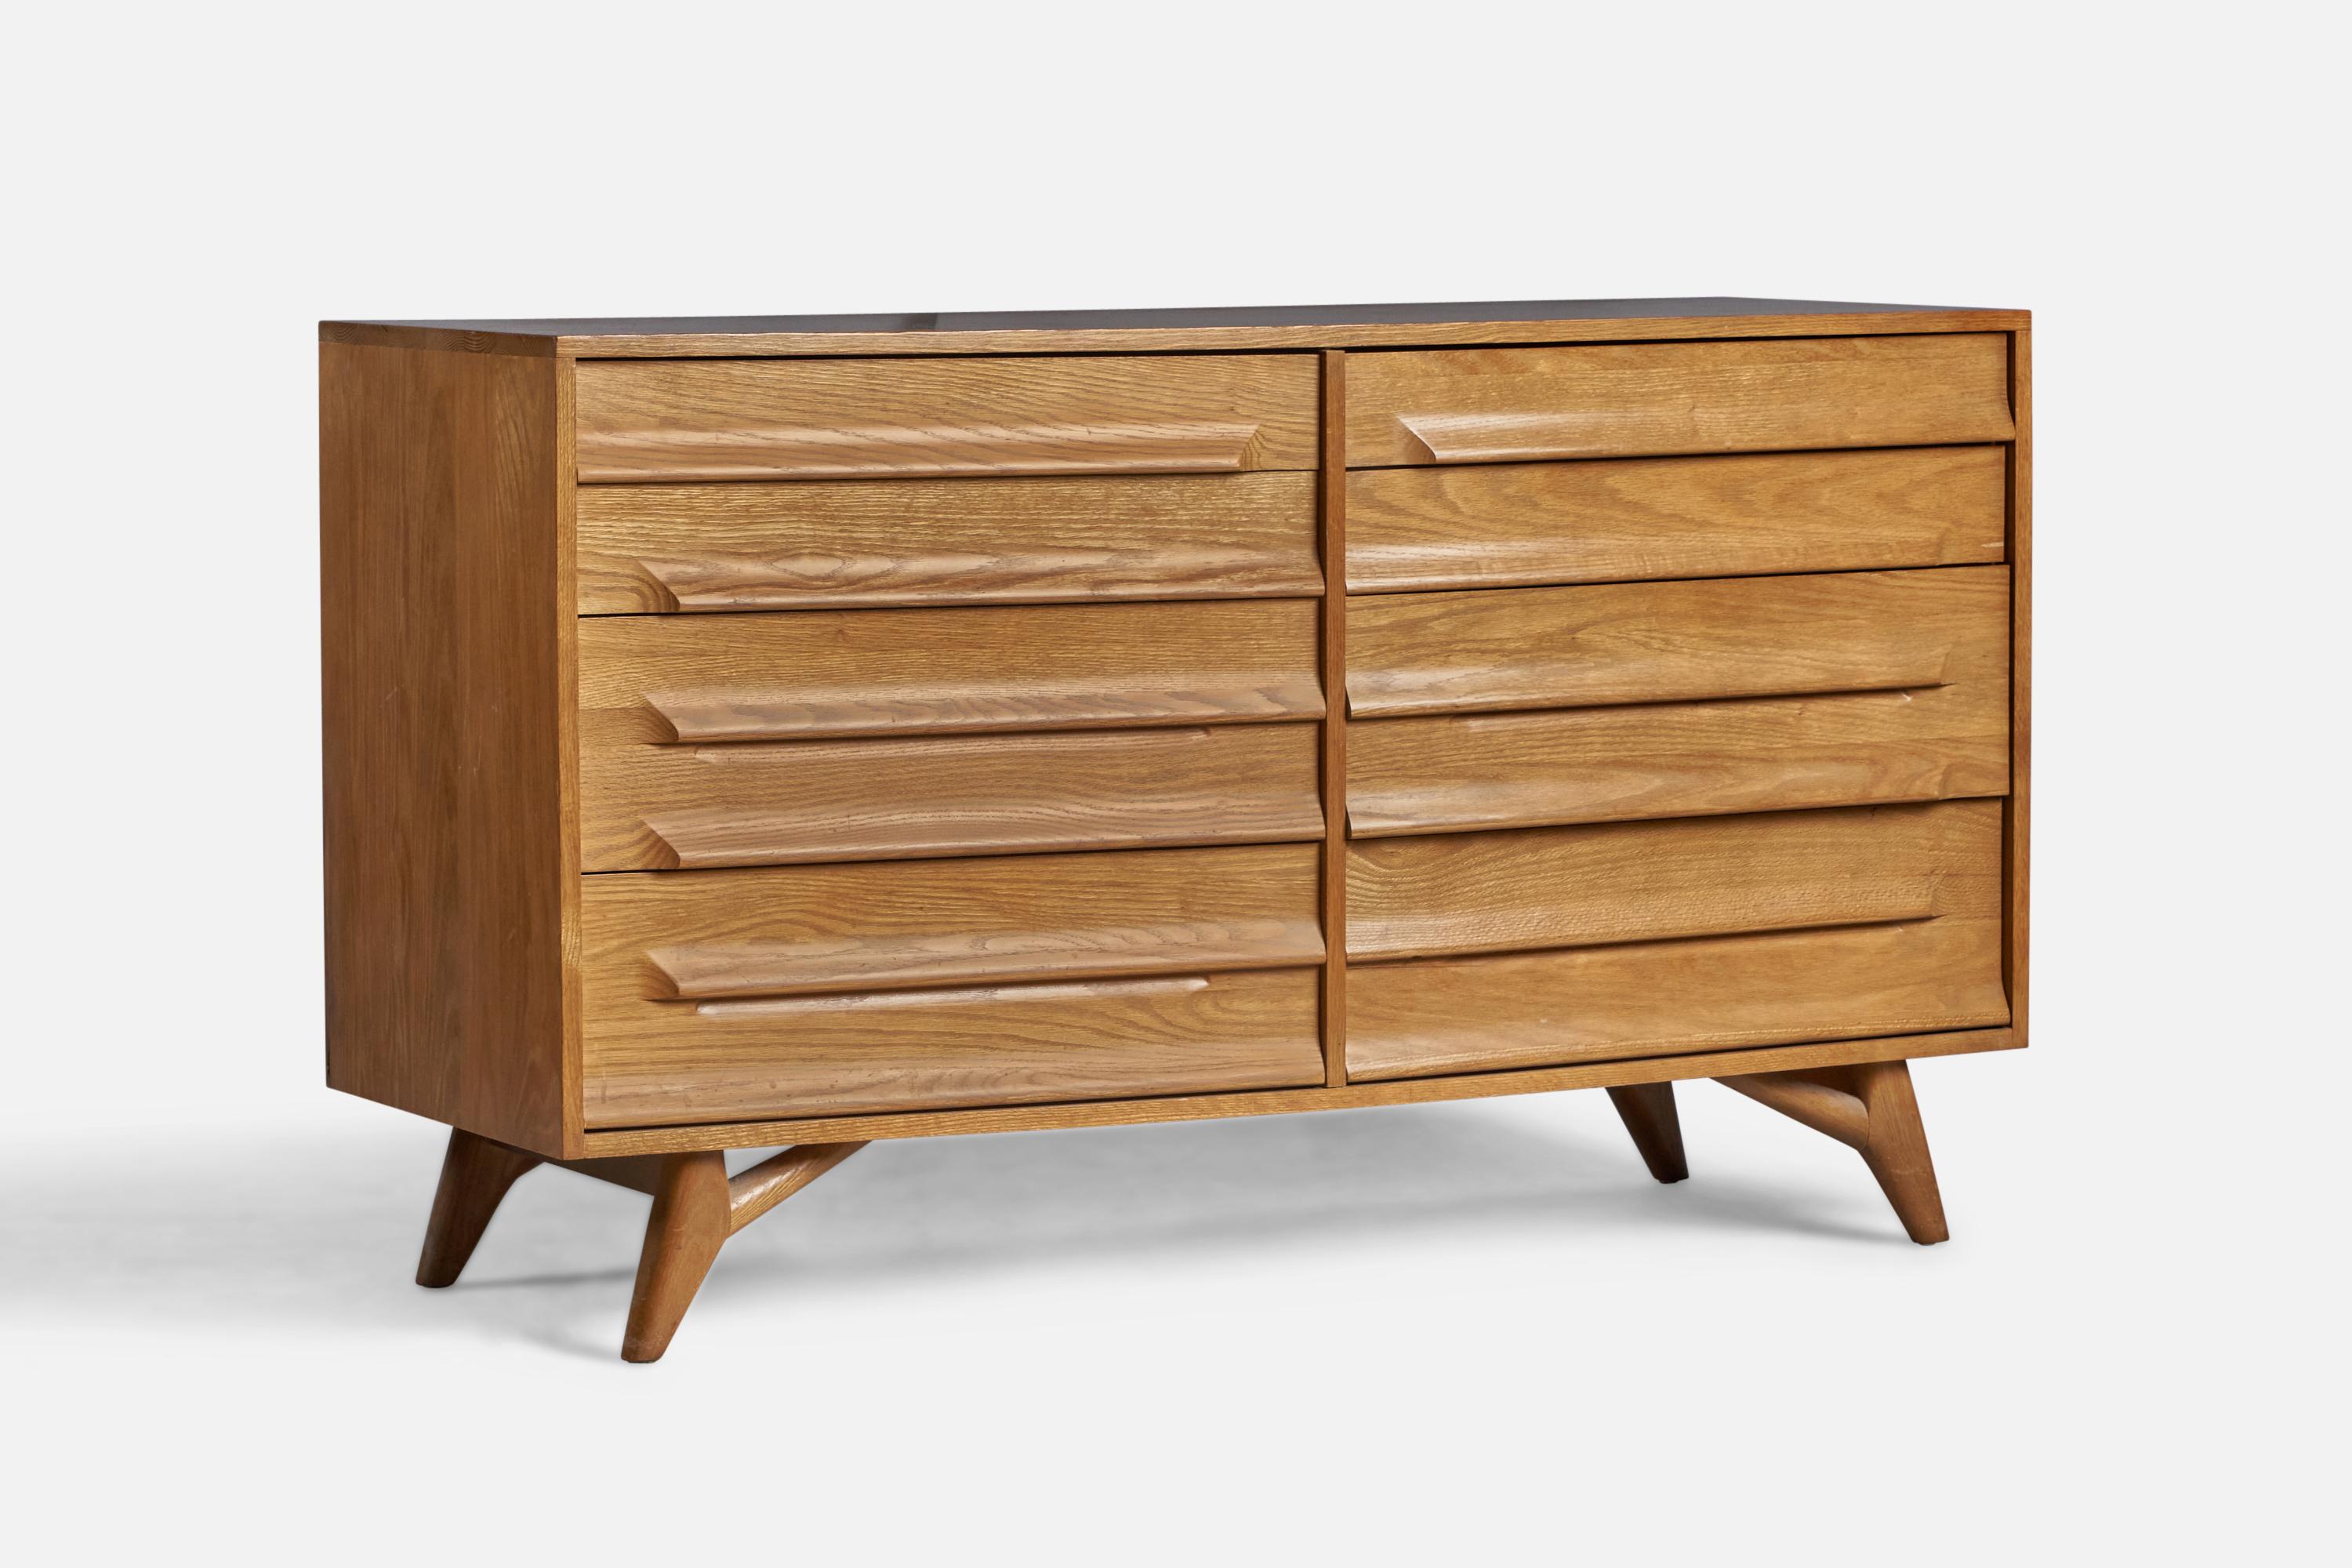 An oak dresser designed by Jack Van Der Molen and produced by Jamestown Lounge Co, USA, 1950s.